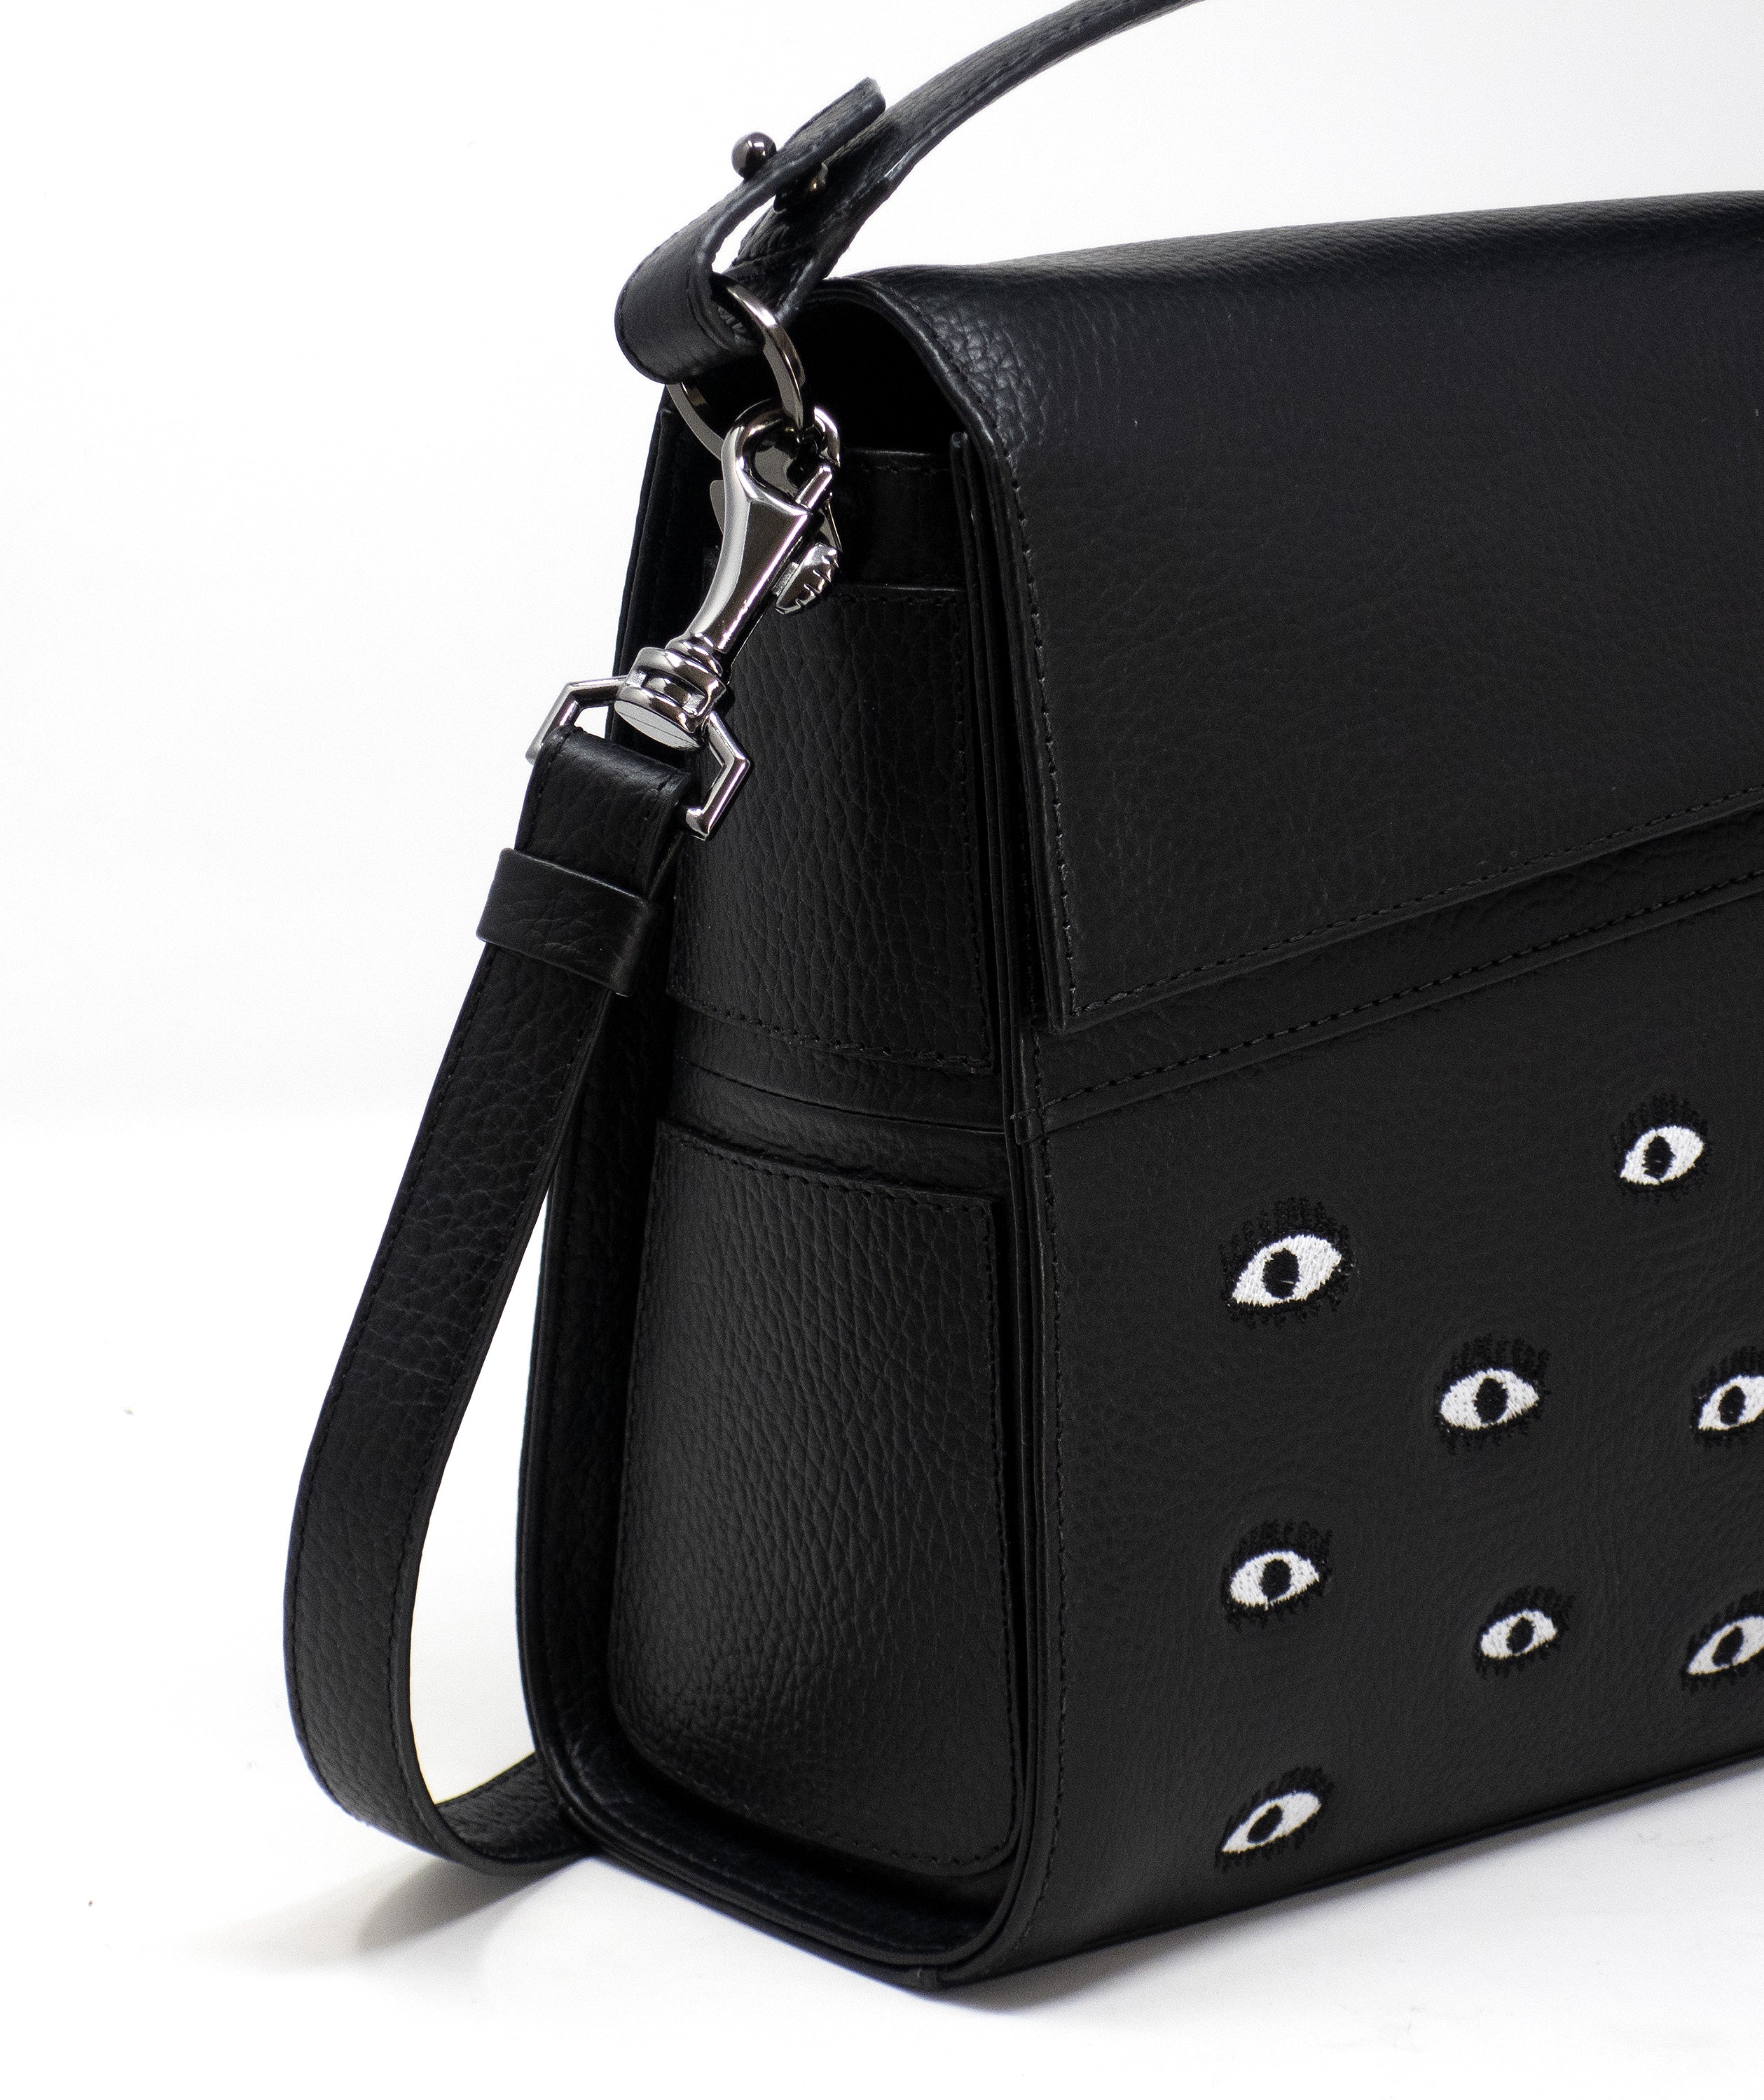 Anastasio Medium Crossbody Handbag Black Leather - Eyes Embroidery - Close up view